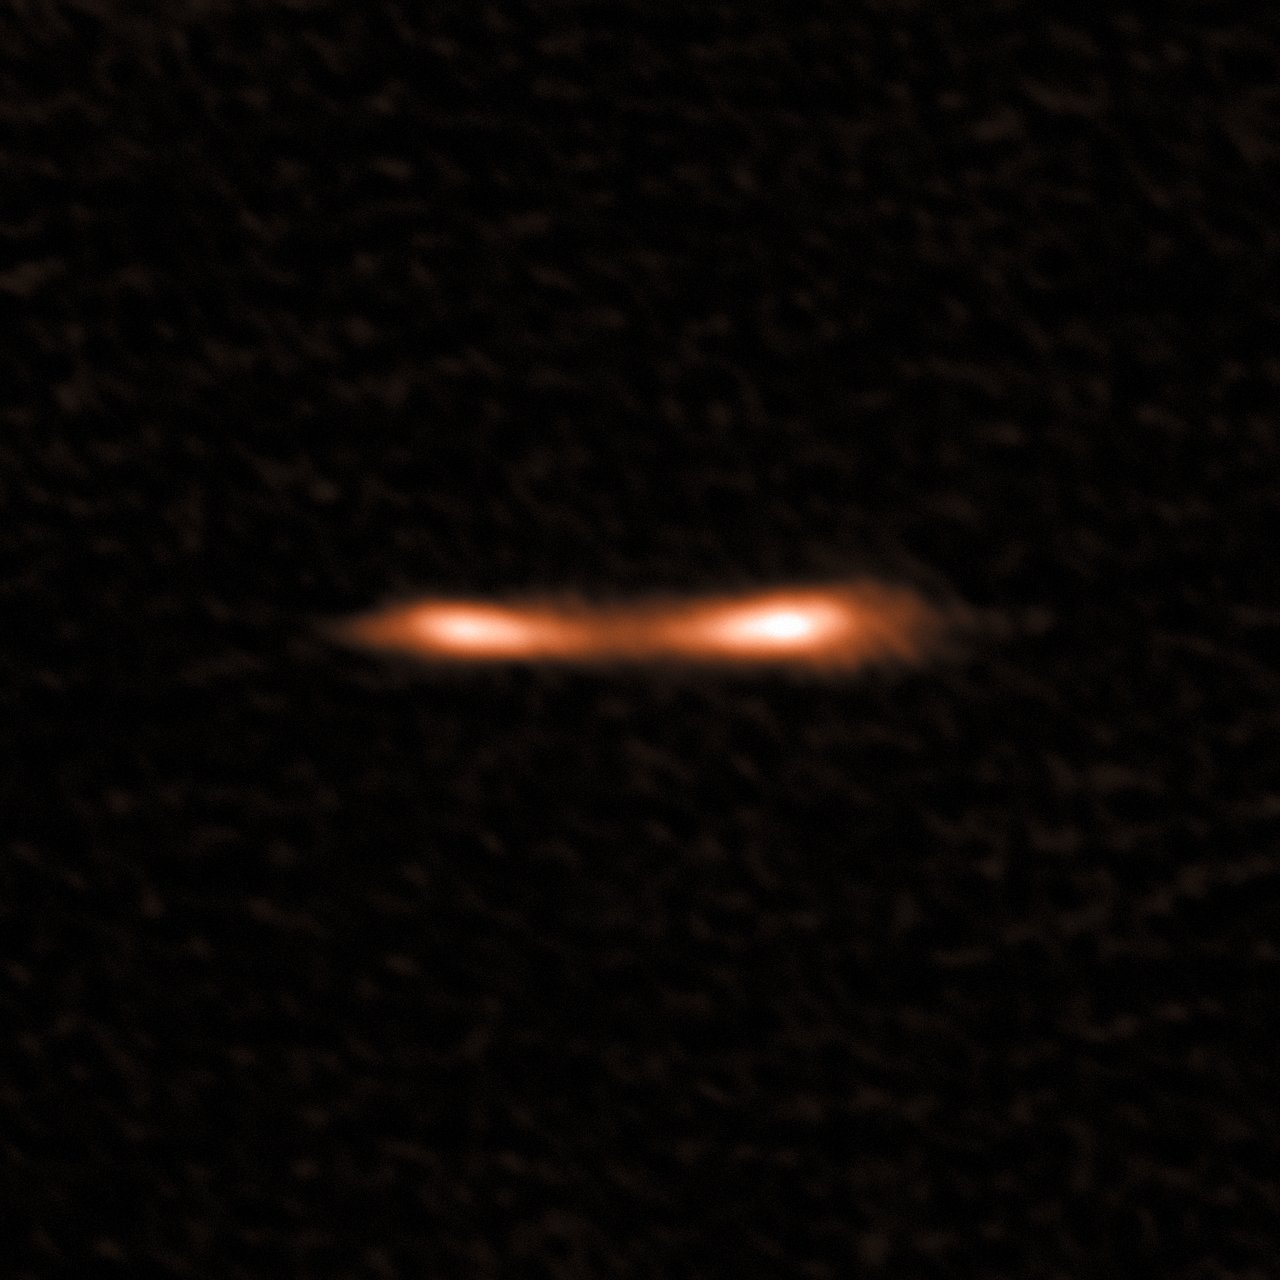 Esta imagen de ALMA muestra una galaxia starburst distante que aparece doblada e iluminada por la lente gravitacional. ALMA (ESO/NAOJ/NRAO)/E. Falgarone et al.